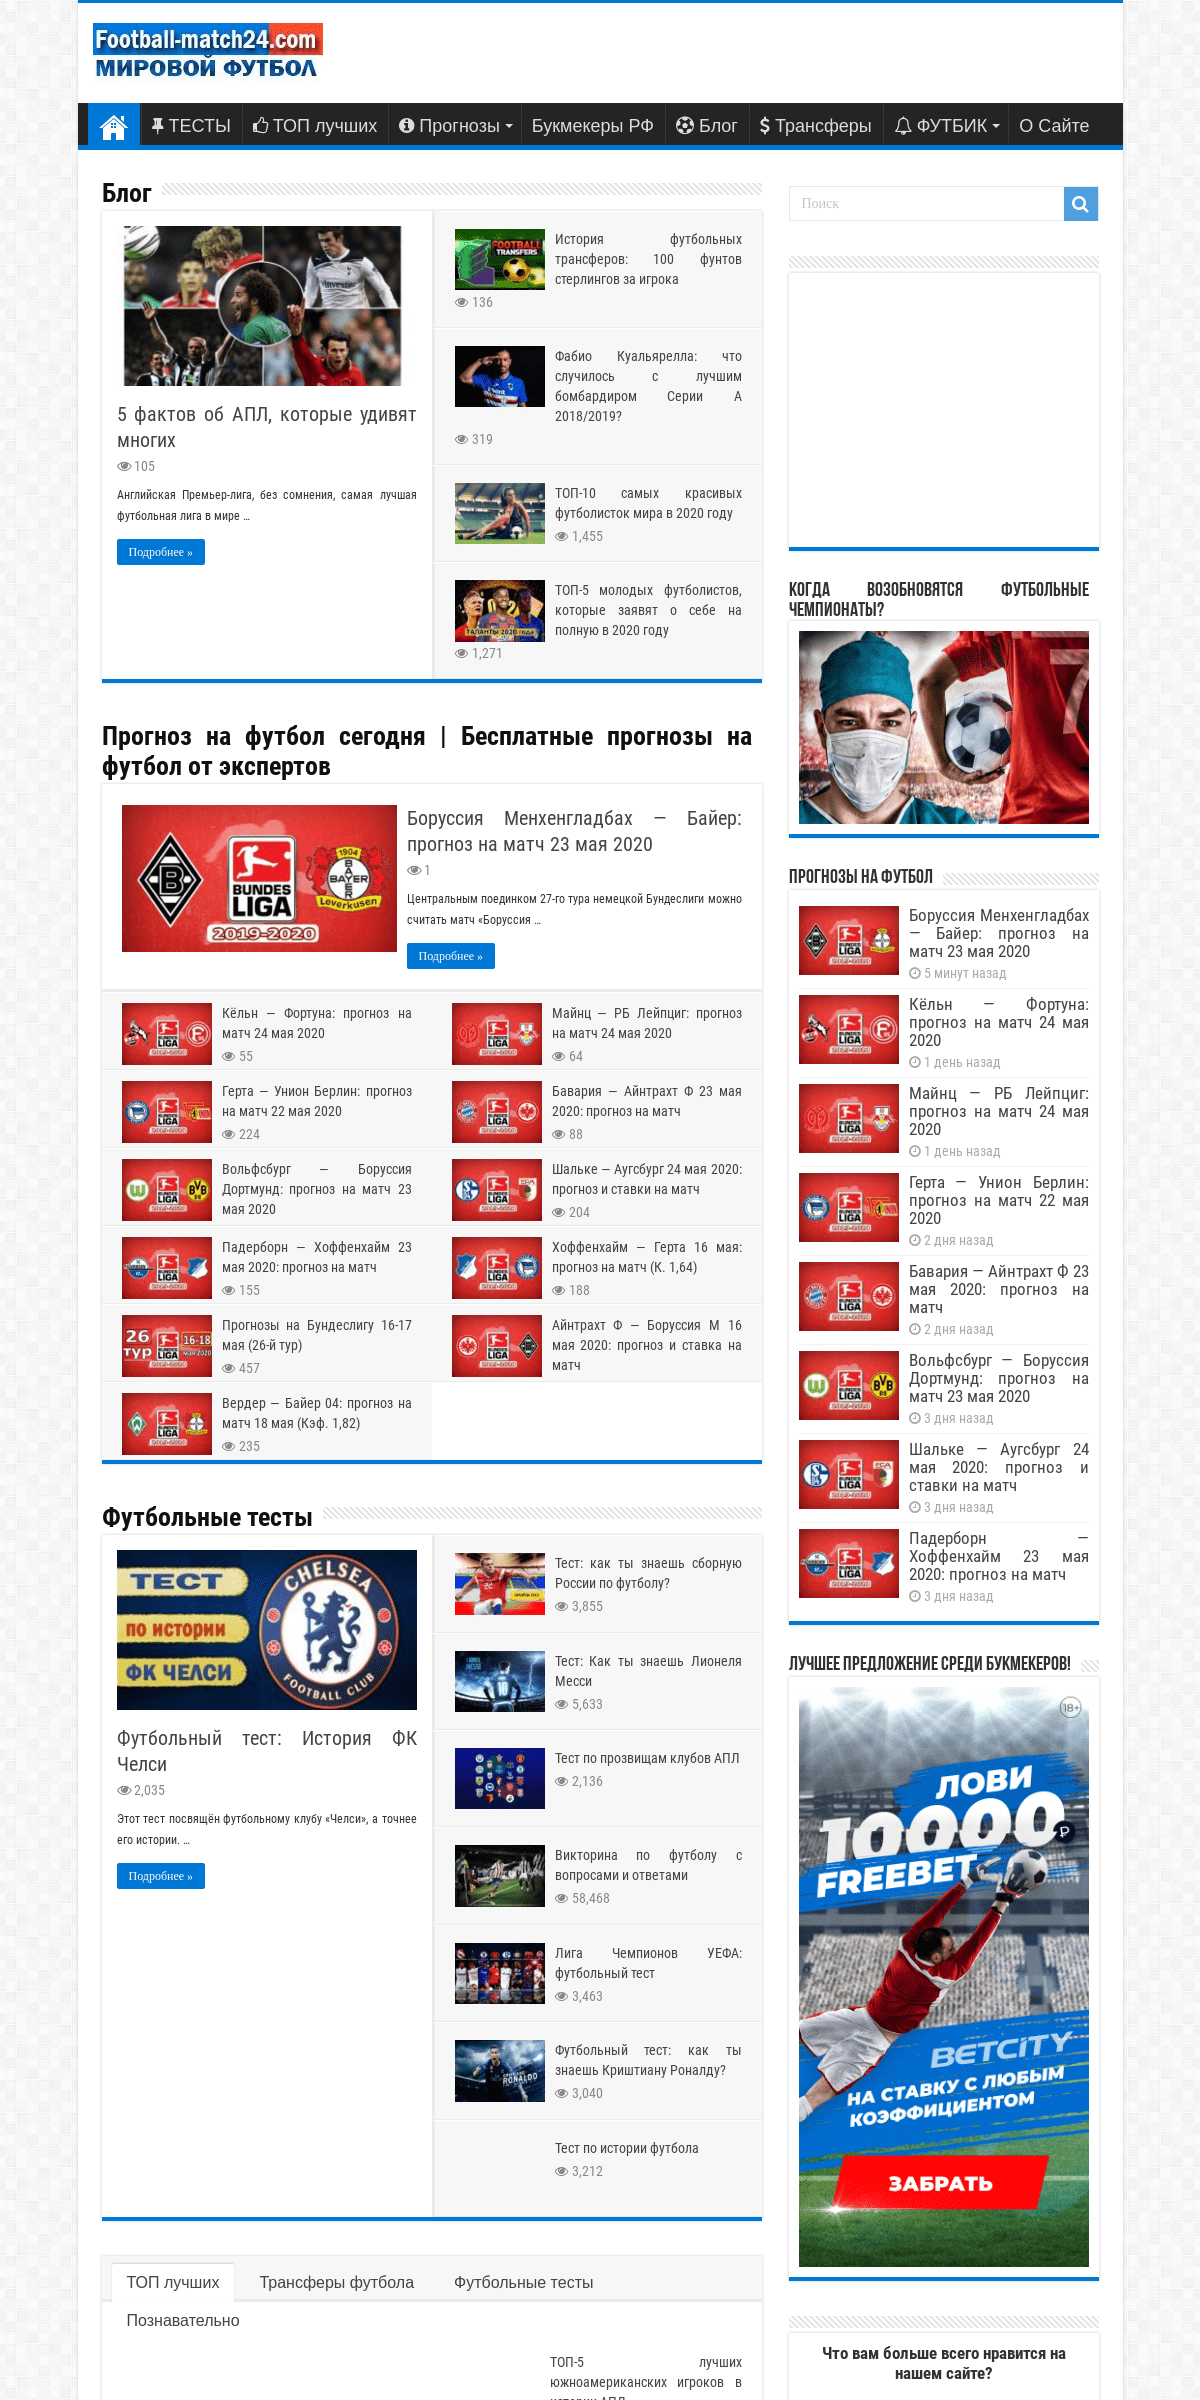 A complete backup of football-match24.com